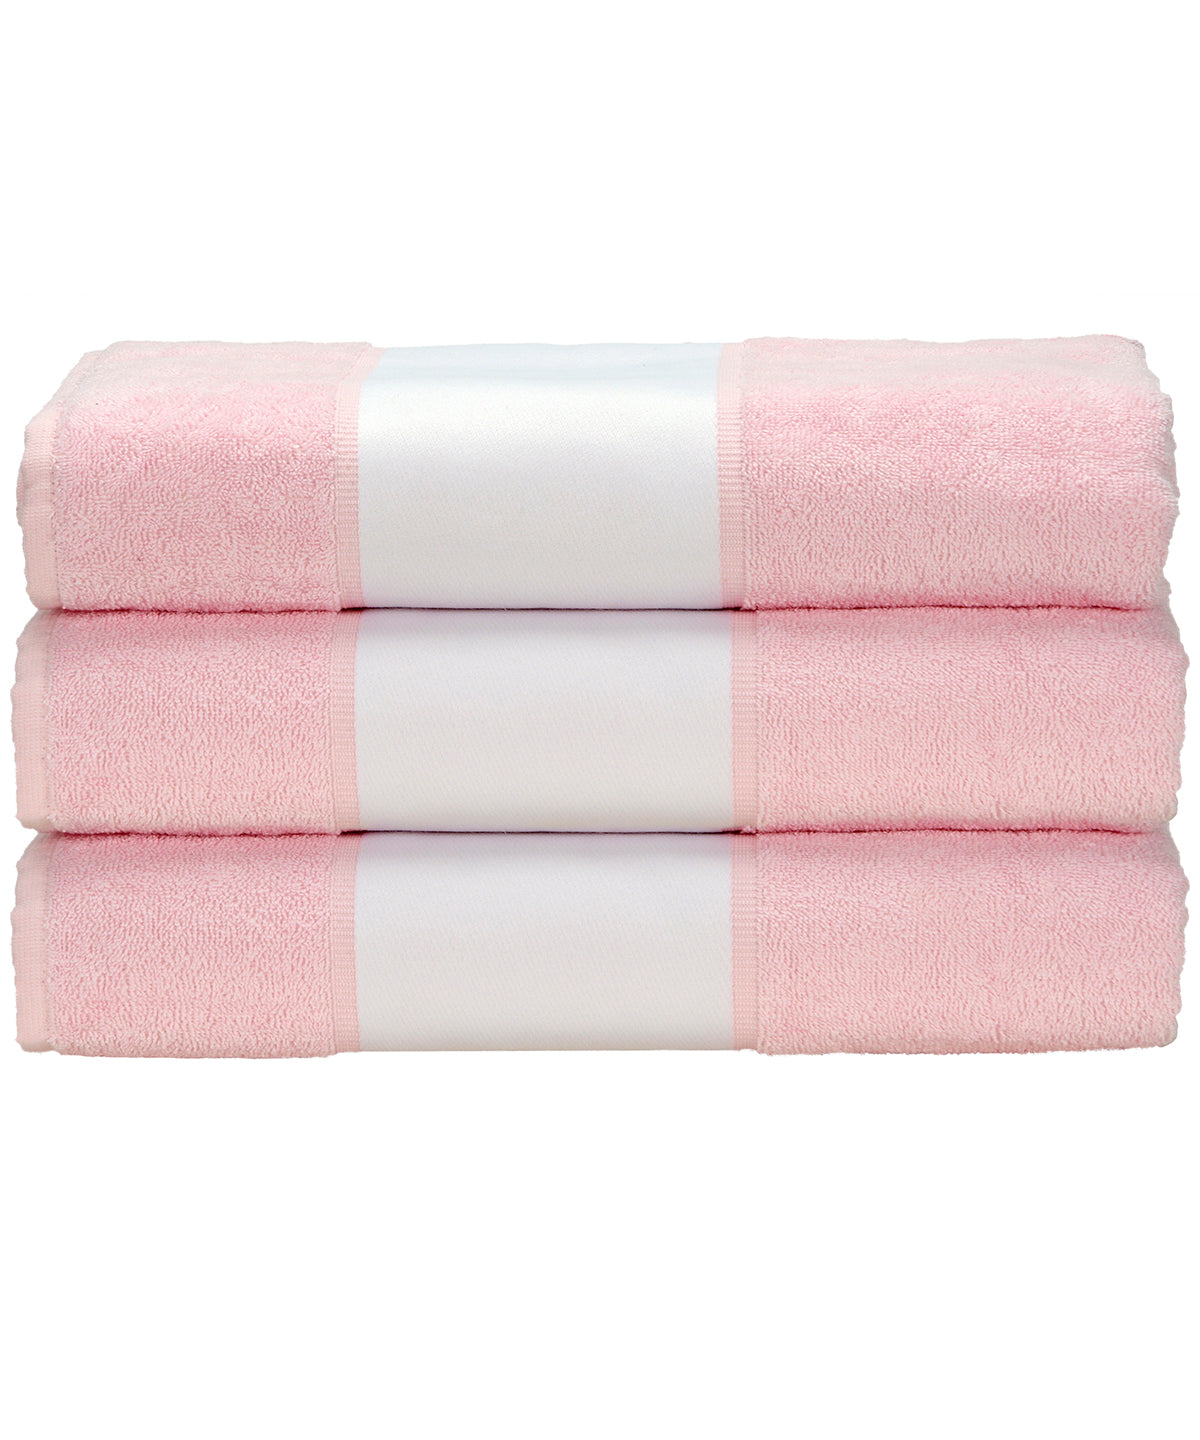 Personalised Towels - Light Pink A&R Towels ARTG® SUBLI-Me® hand towel